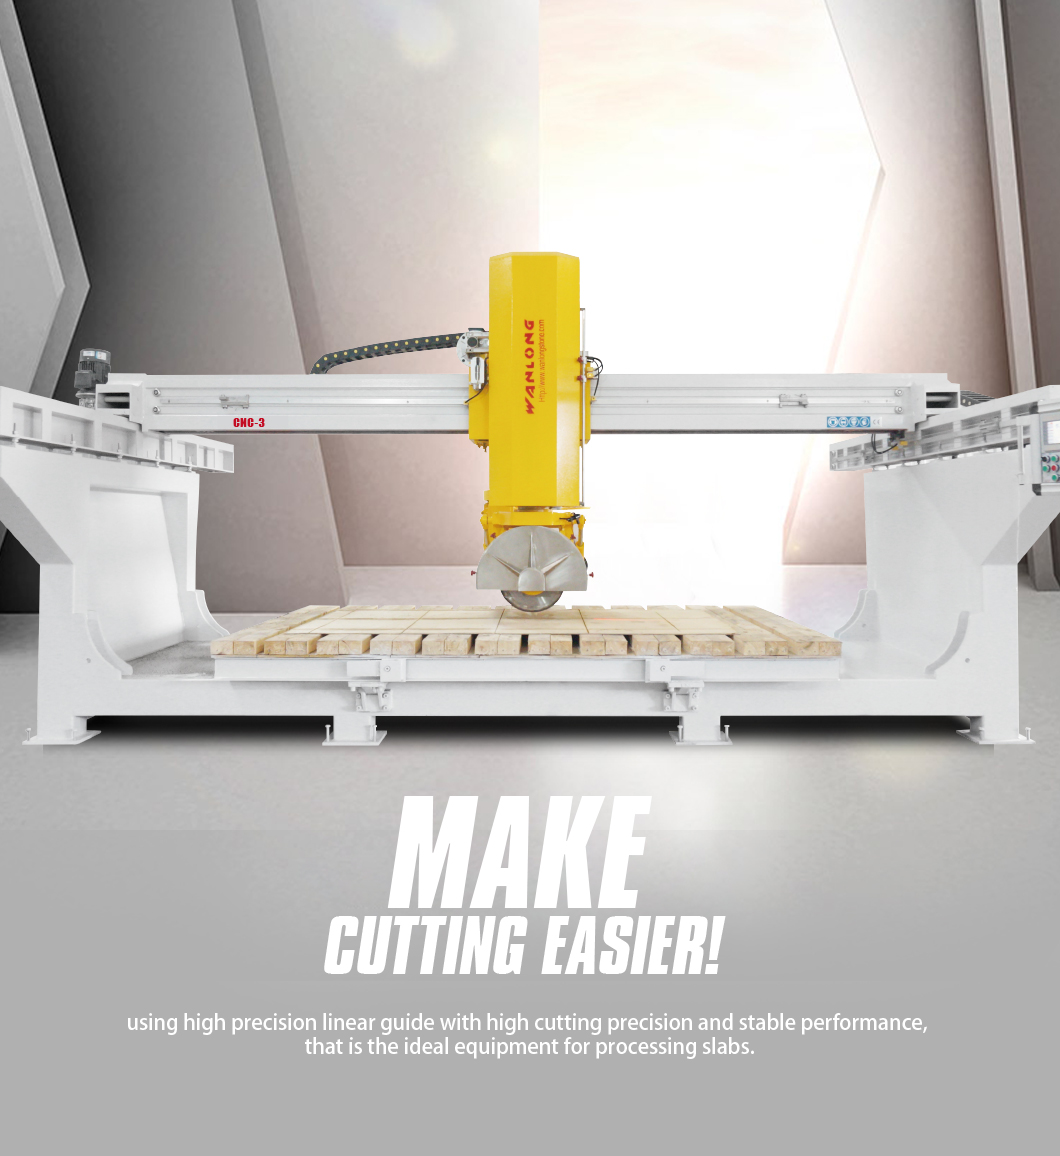 （CNC-3/3A）3axis Mono-block Bridge Cutting Machine - Cutting Machinery - 1